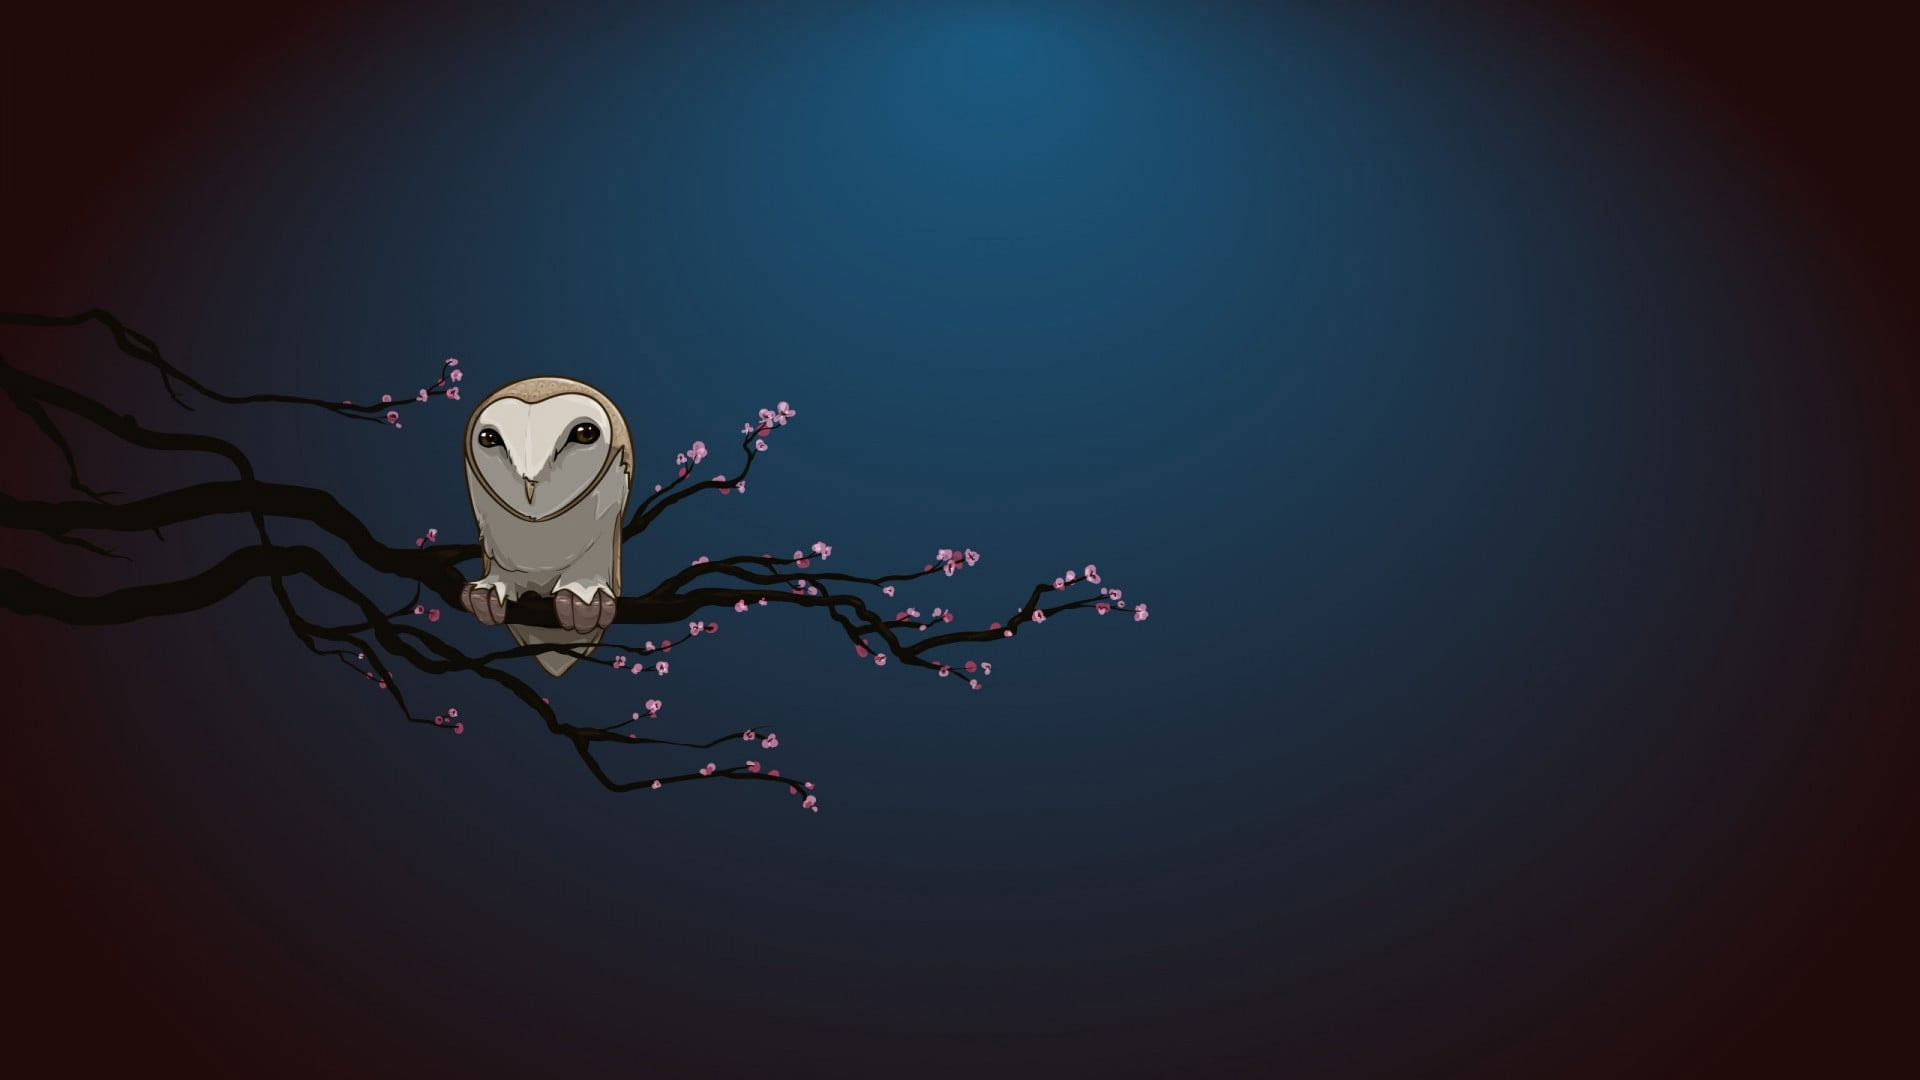 Wallpaper Owl Perched On Tree Illustration, Art